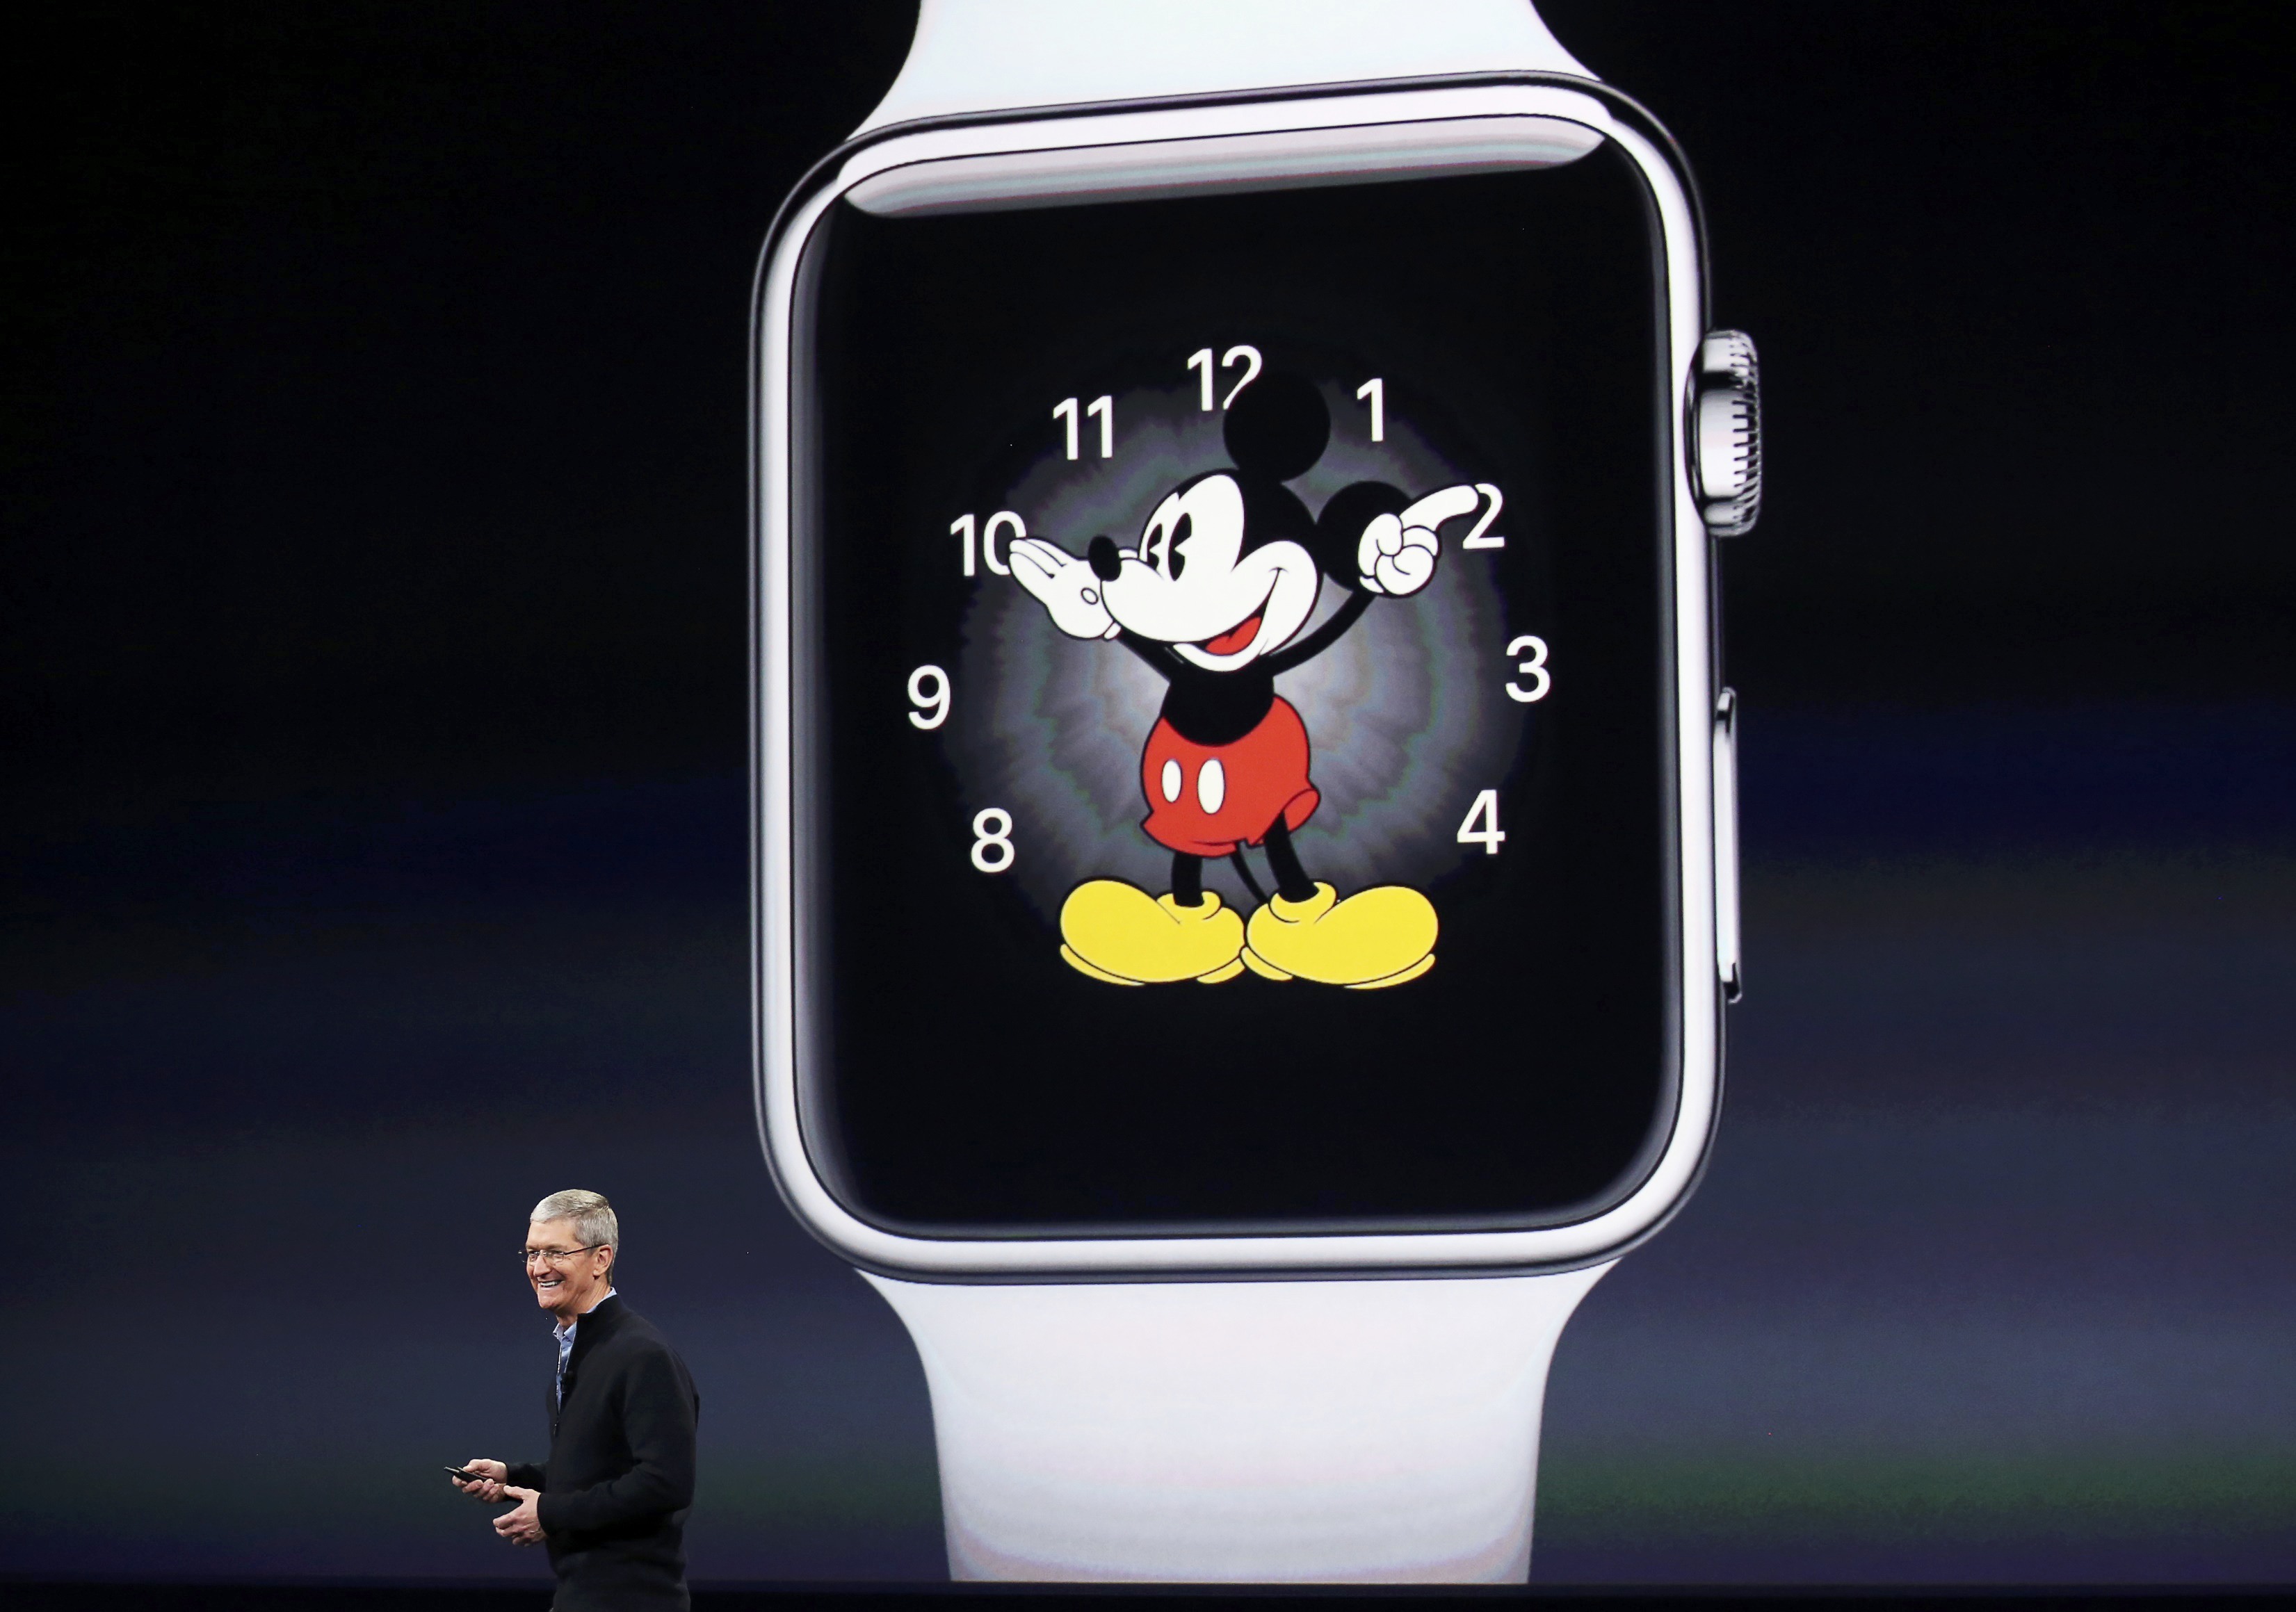 Заставка часов как на айфоне. Микки Маус на Эппл вотч. Микки Маус на часы эпл вотч. Циферблаты для Эппл вотч Микки Маус. Эпл вотч часы экран Мики.